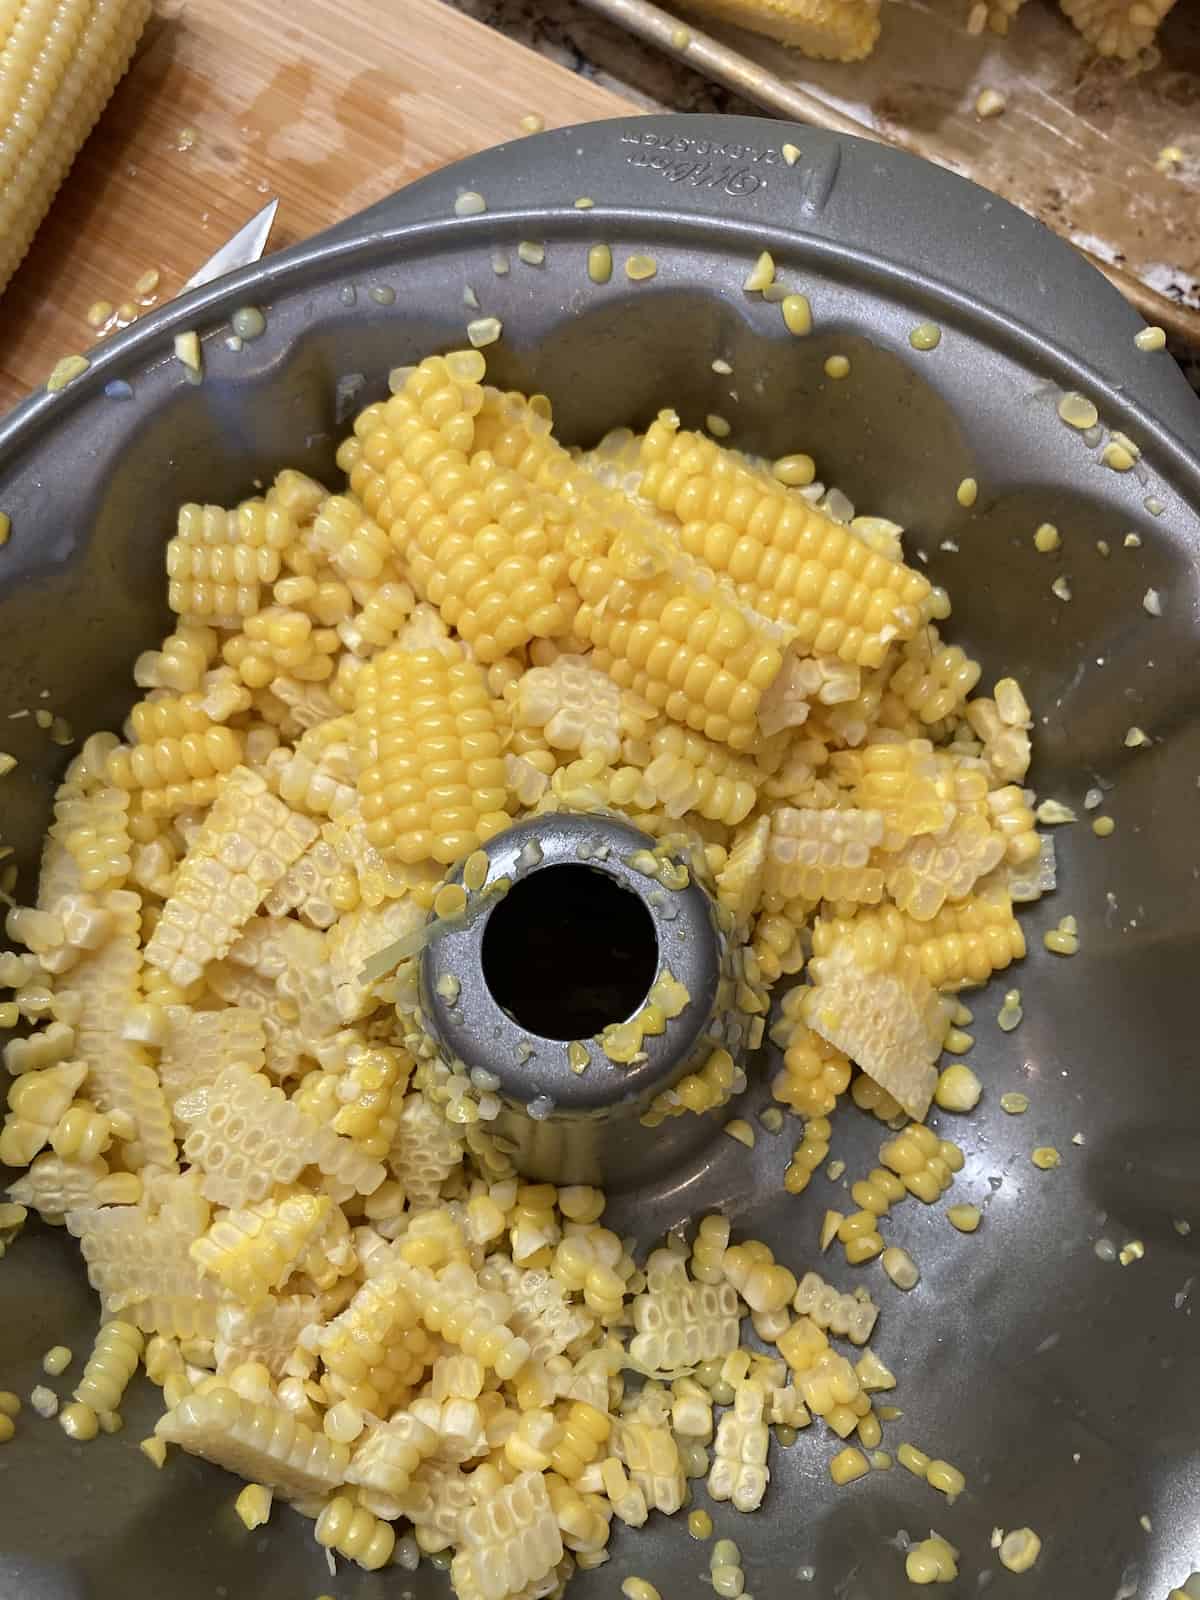 Cut corn kernals in a bundt pan.